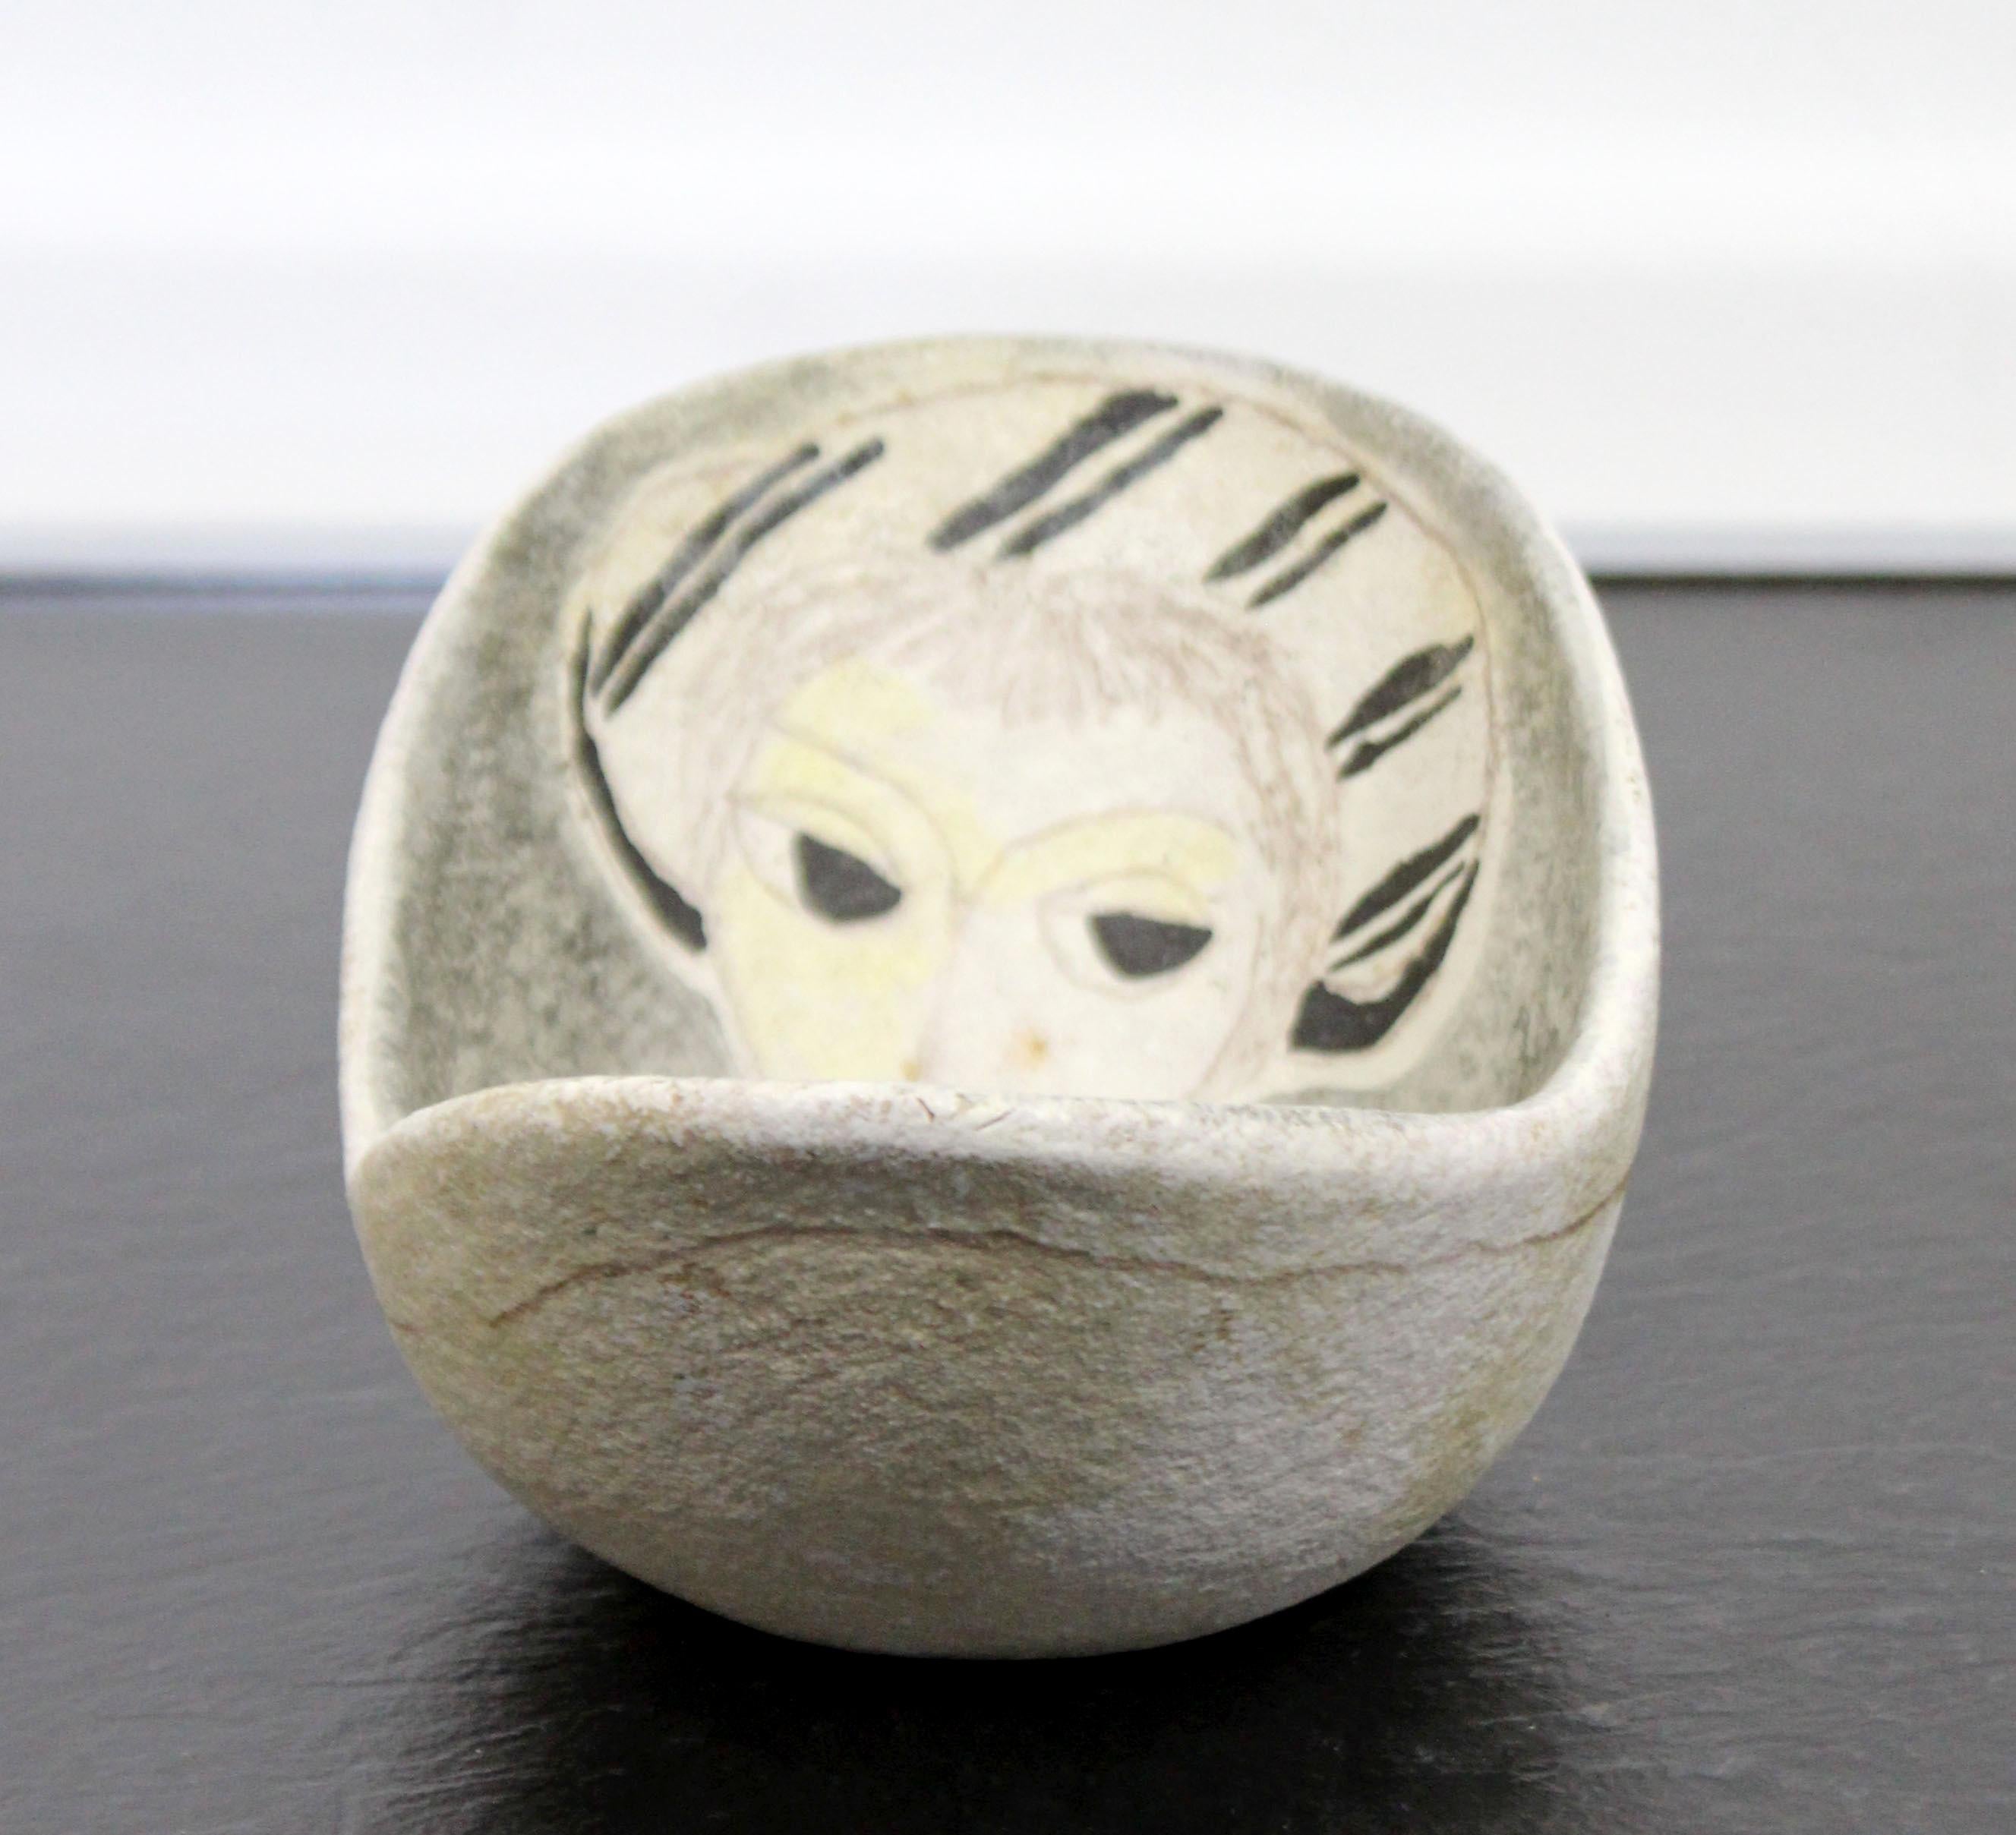 Mid-Century Modern Fantoni Raymor Signed Ceramic Art Bowl Made in Italy 1960s (Moderne der Mitte des Jahrhunderts)